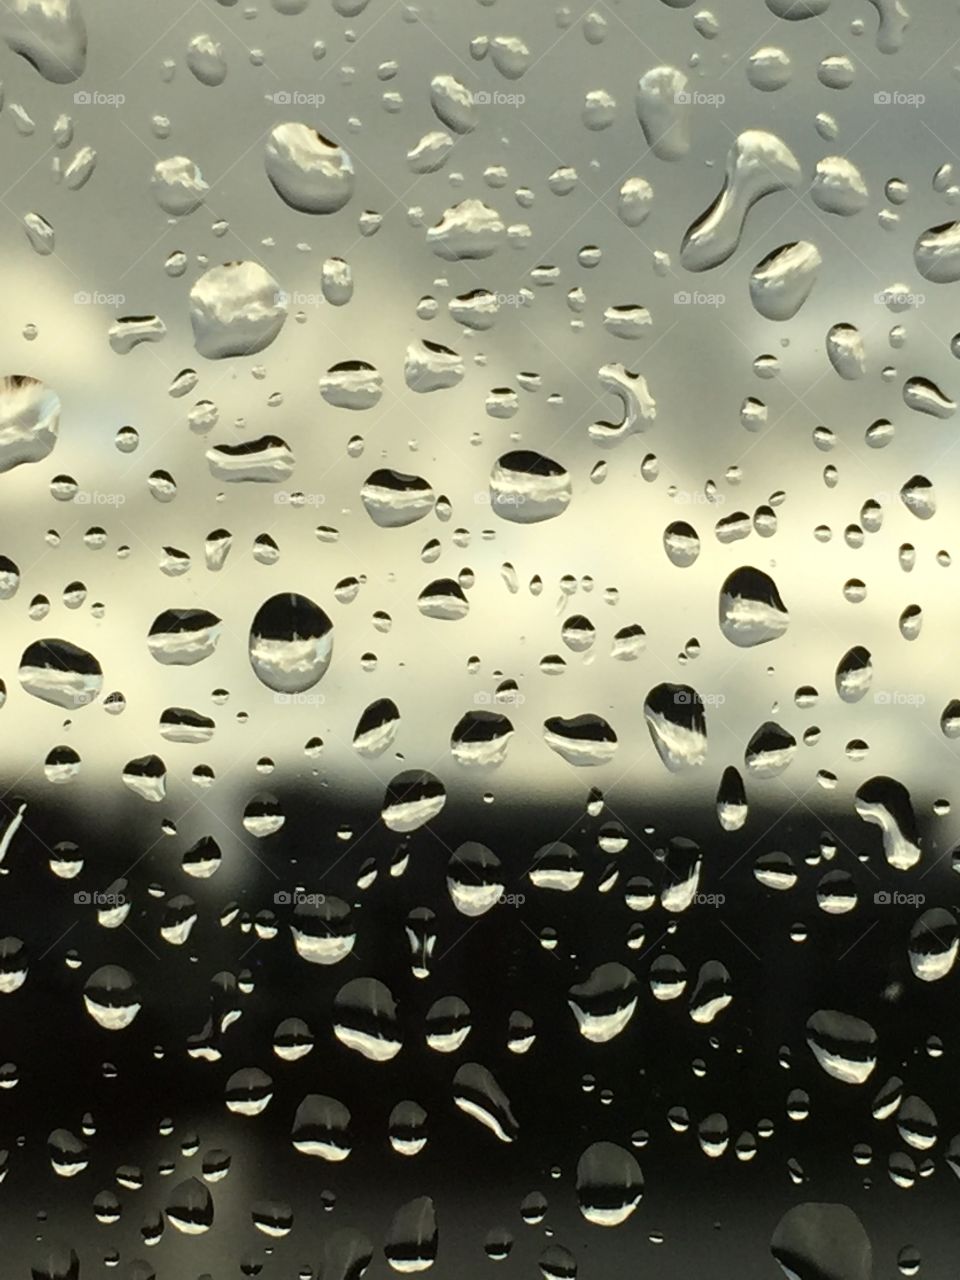 Raindrops on glass 